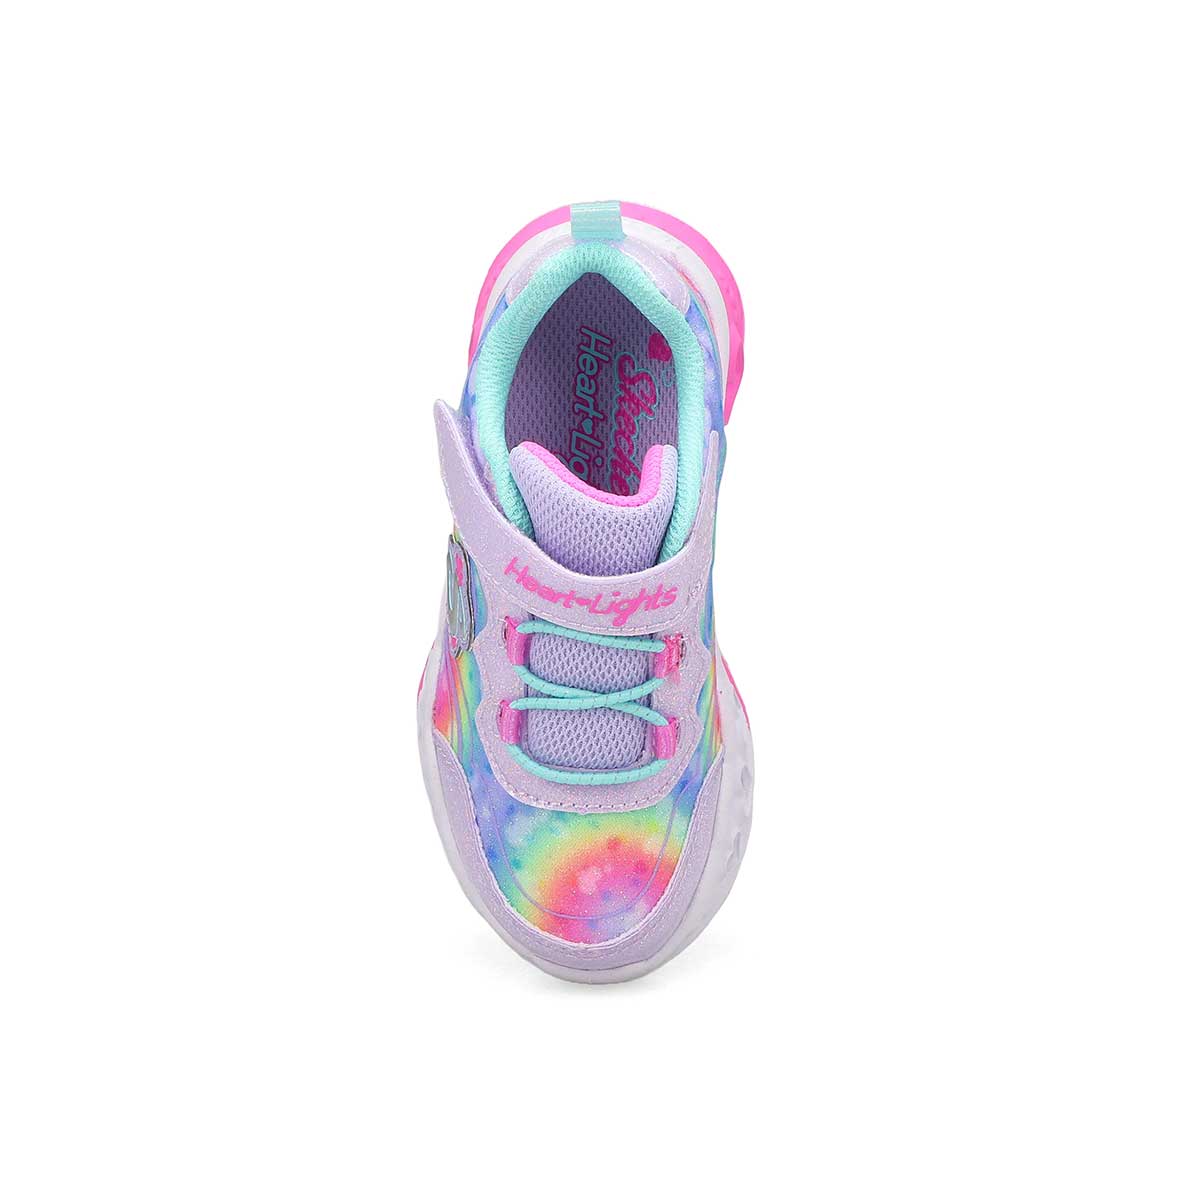 Infants' G Flutter Heart Lights Groovy Swirl Sneaker - Lavender/Aqua